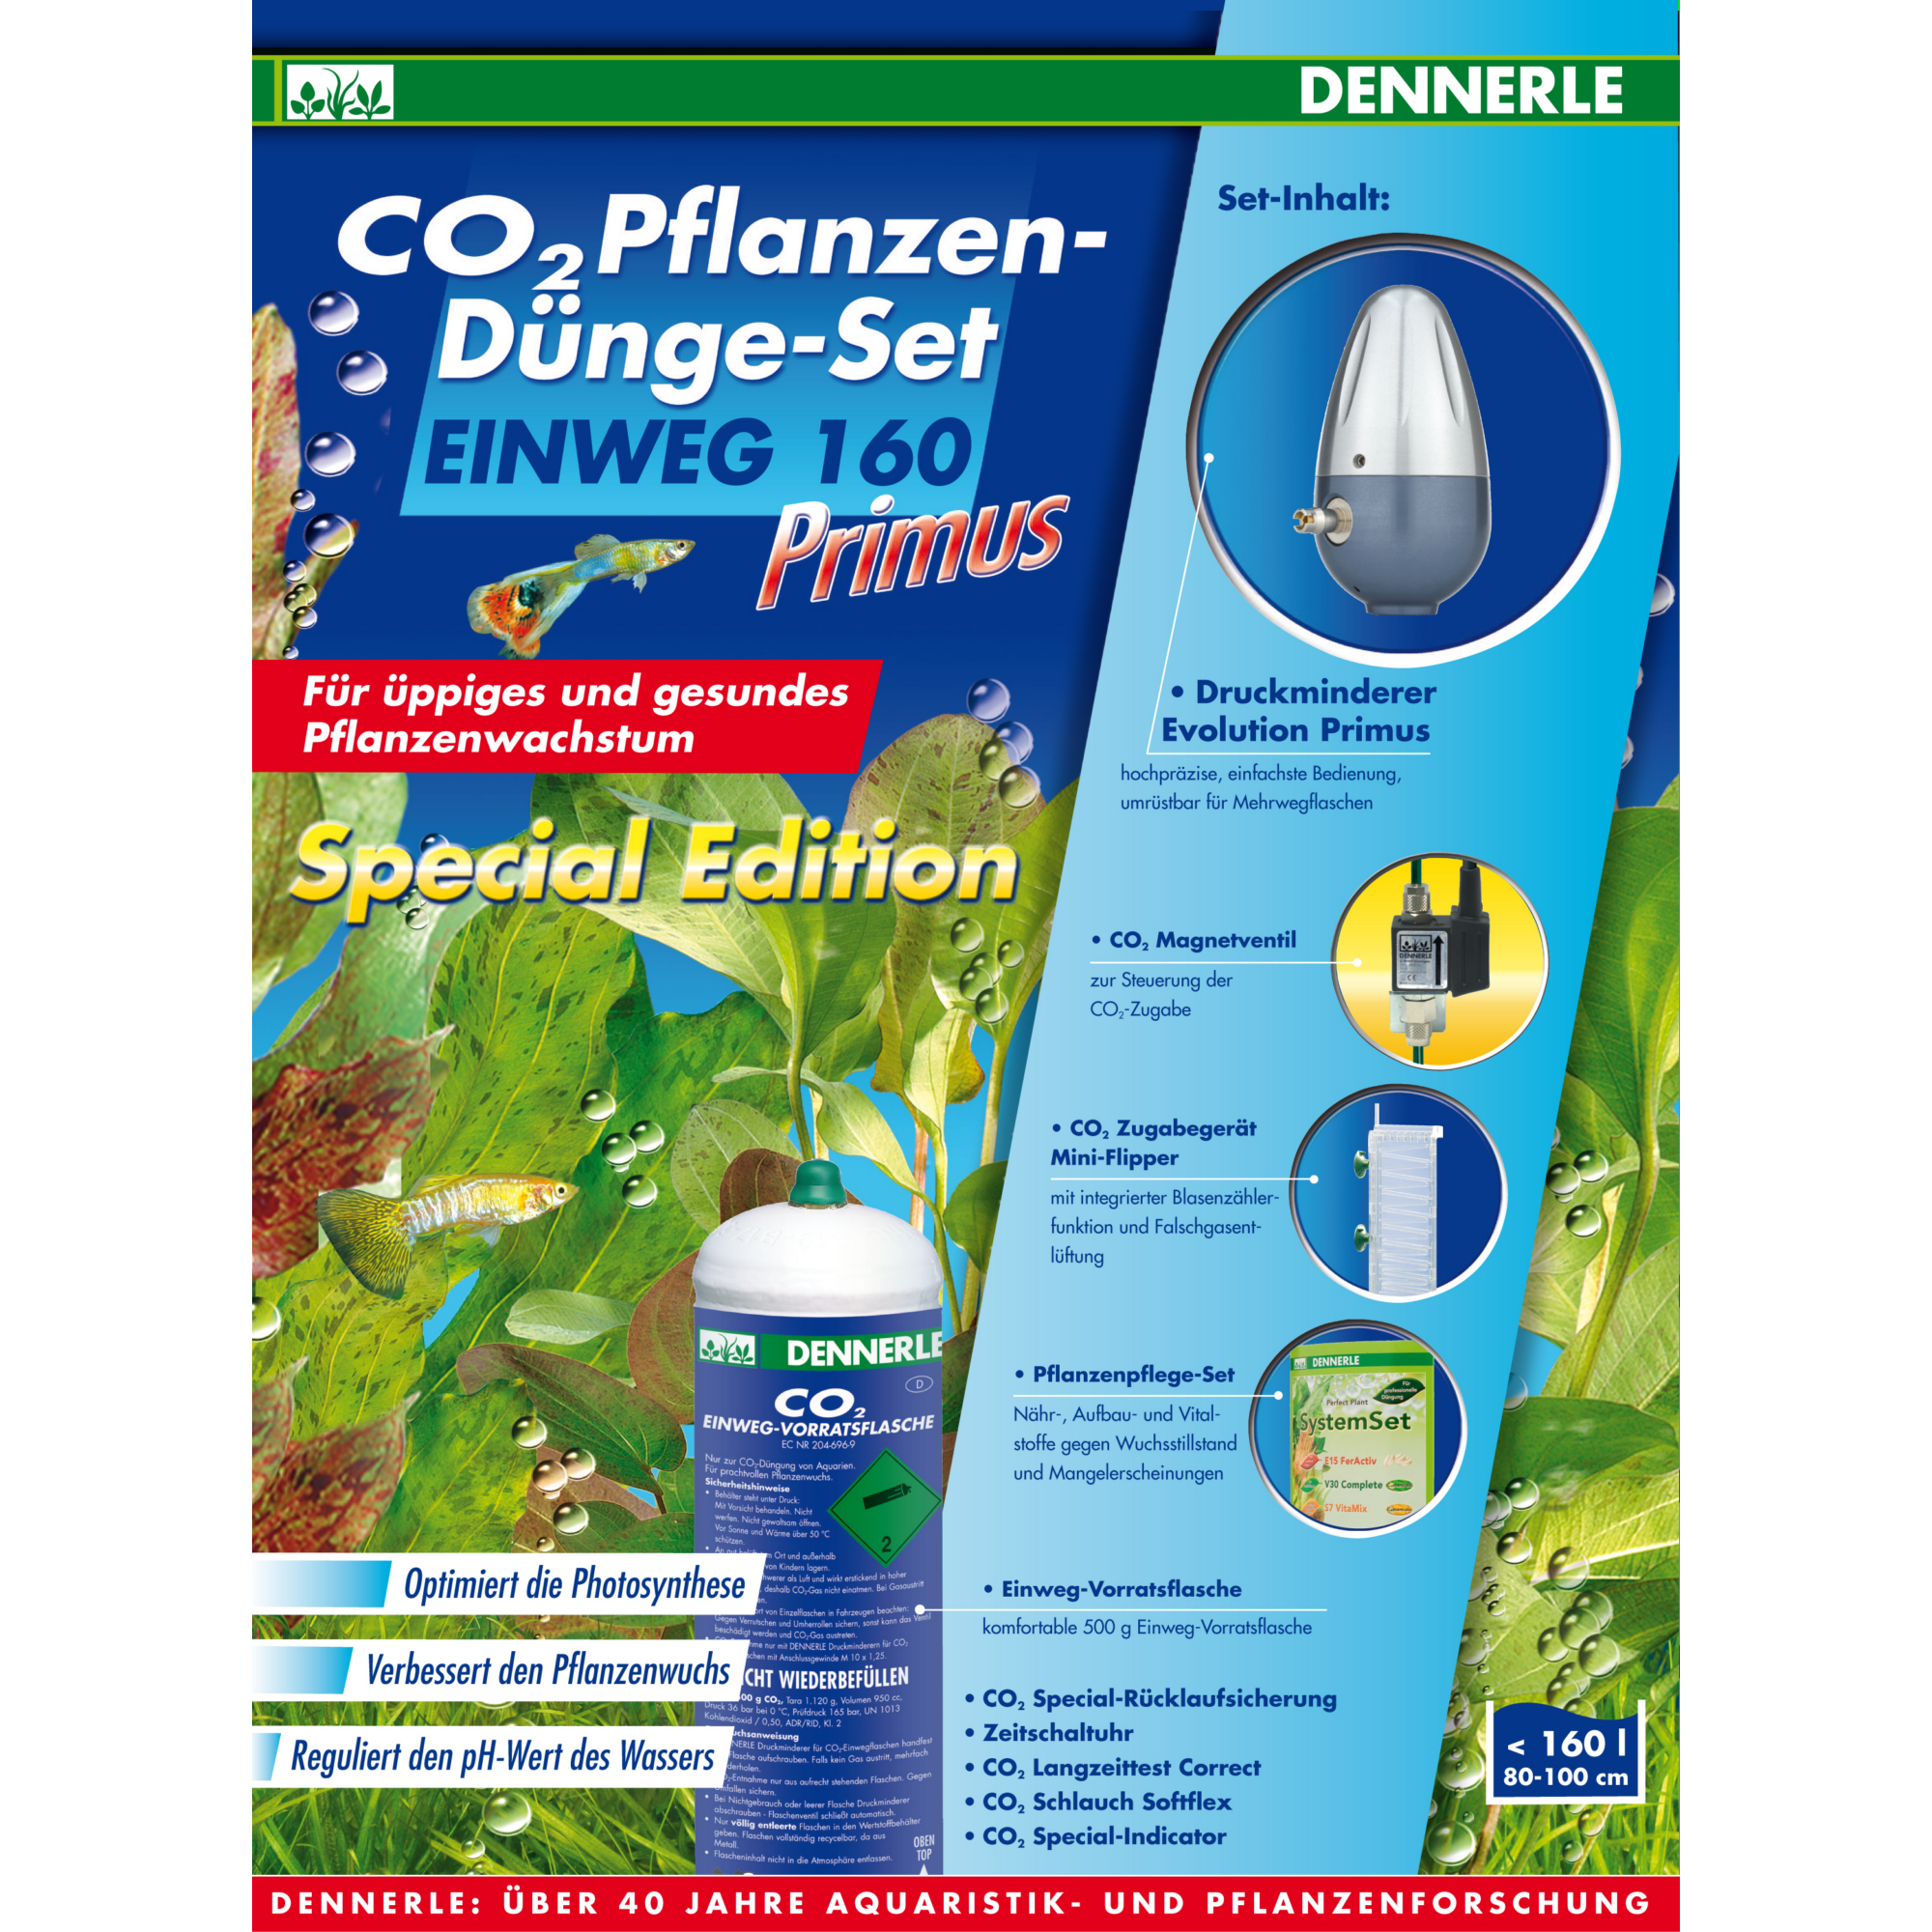 CO2 Pflanzen-Sünge-Set Primus + product picture